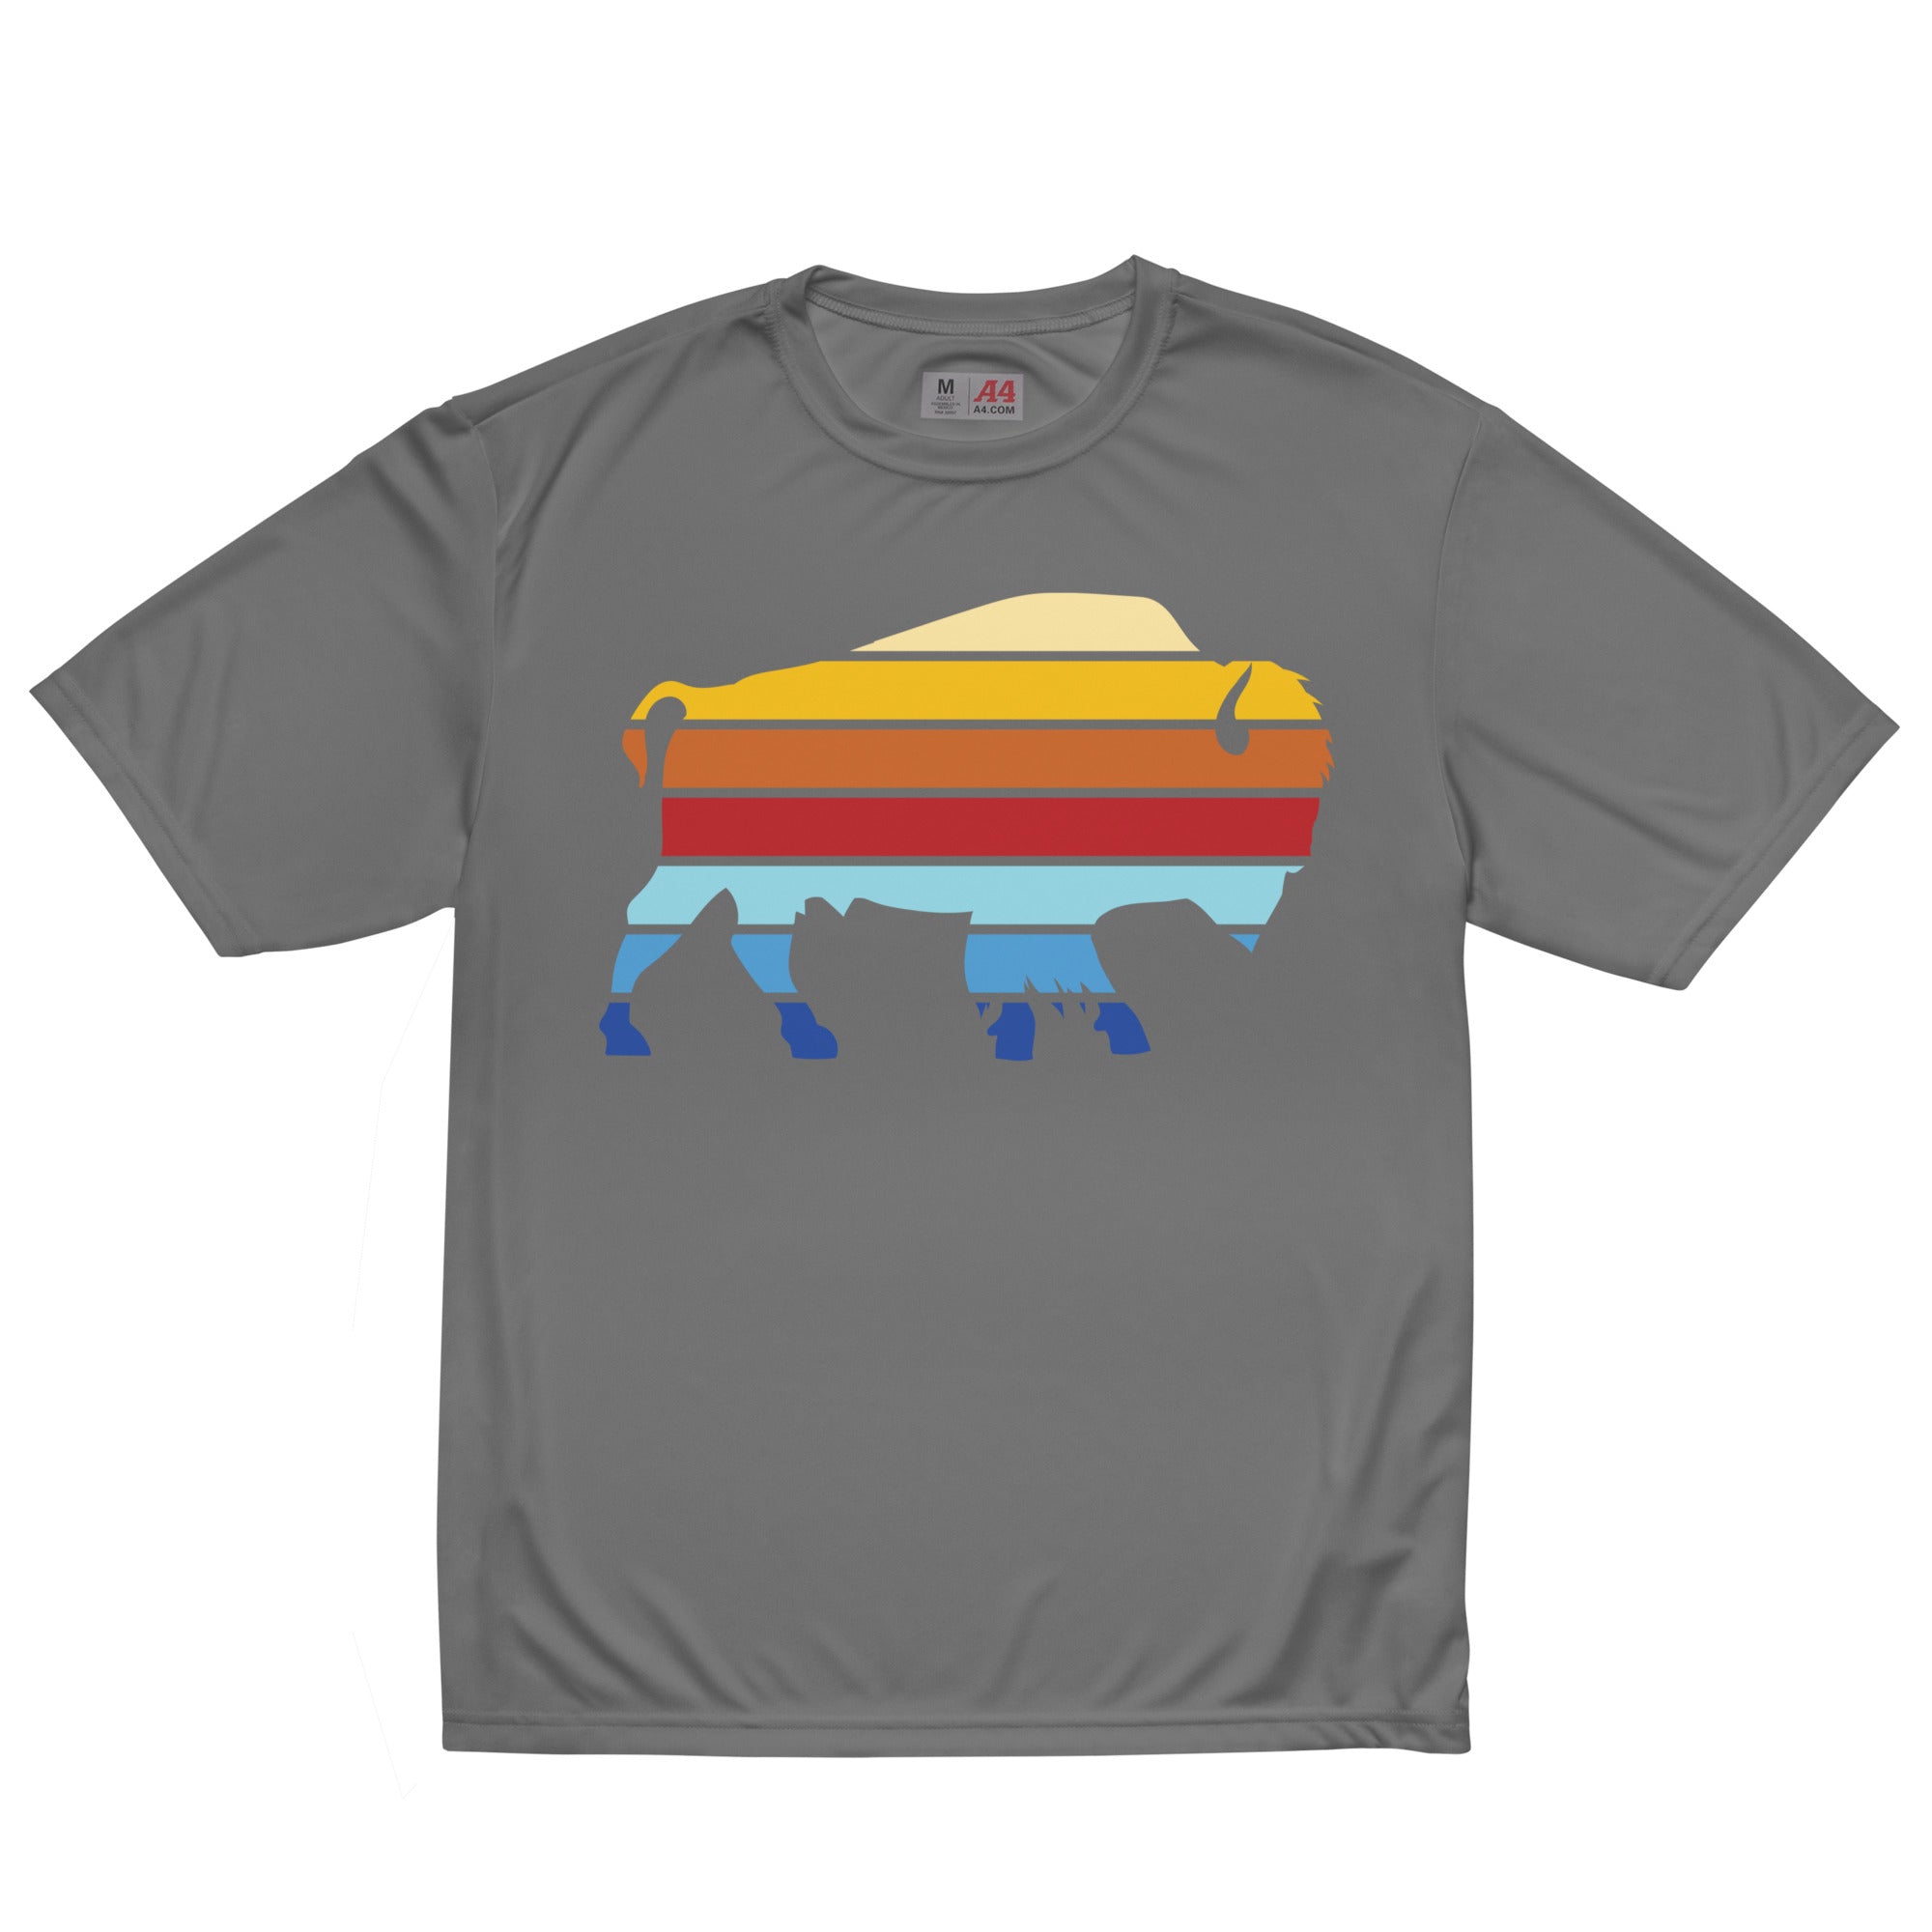 Bull Bison Stack Performance T-Shirt